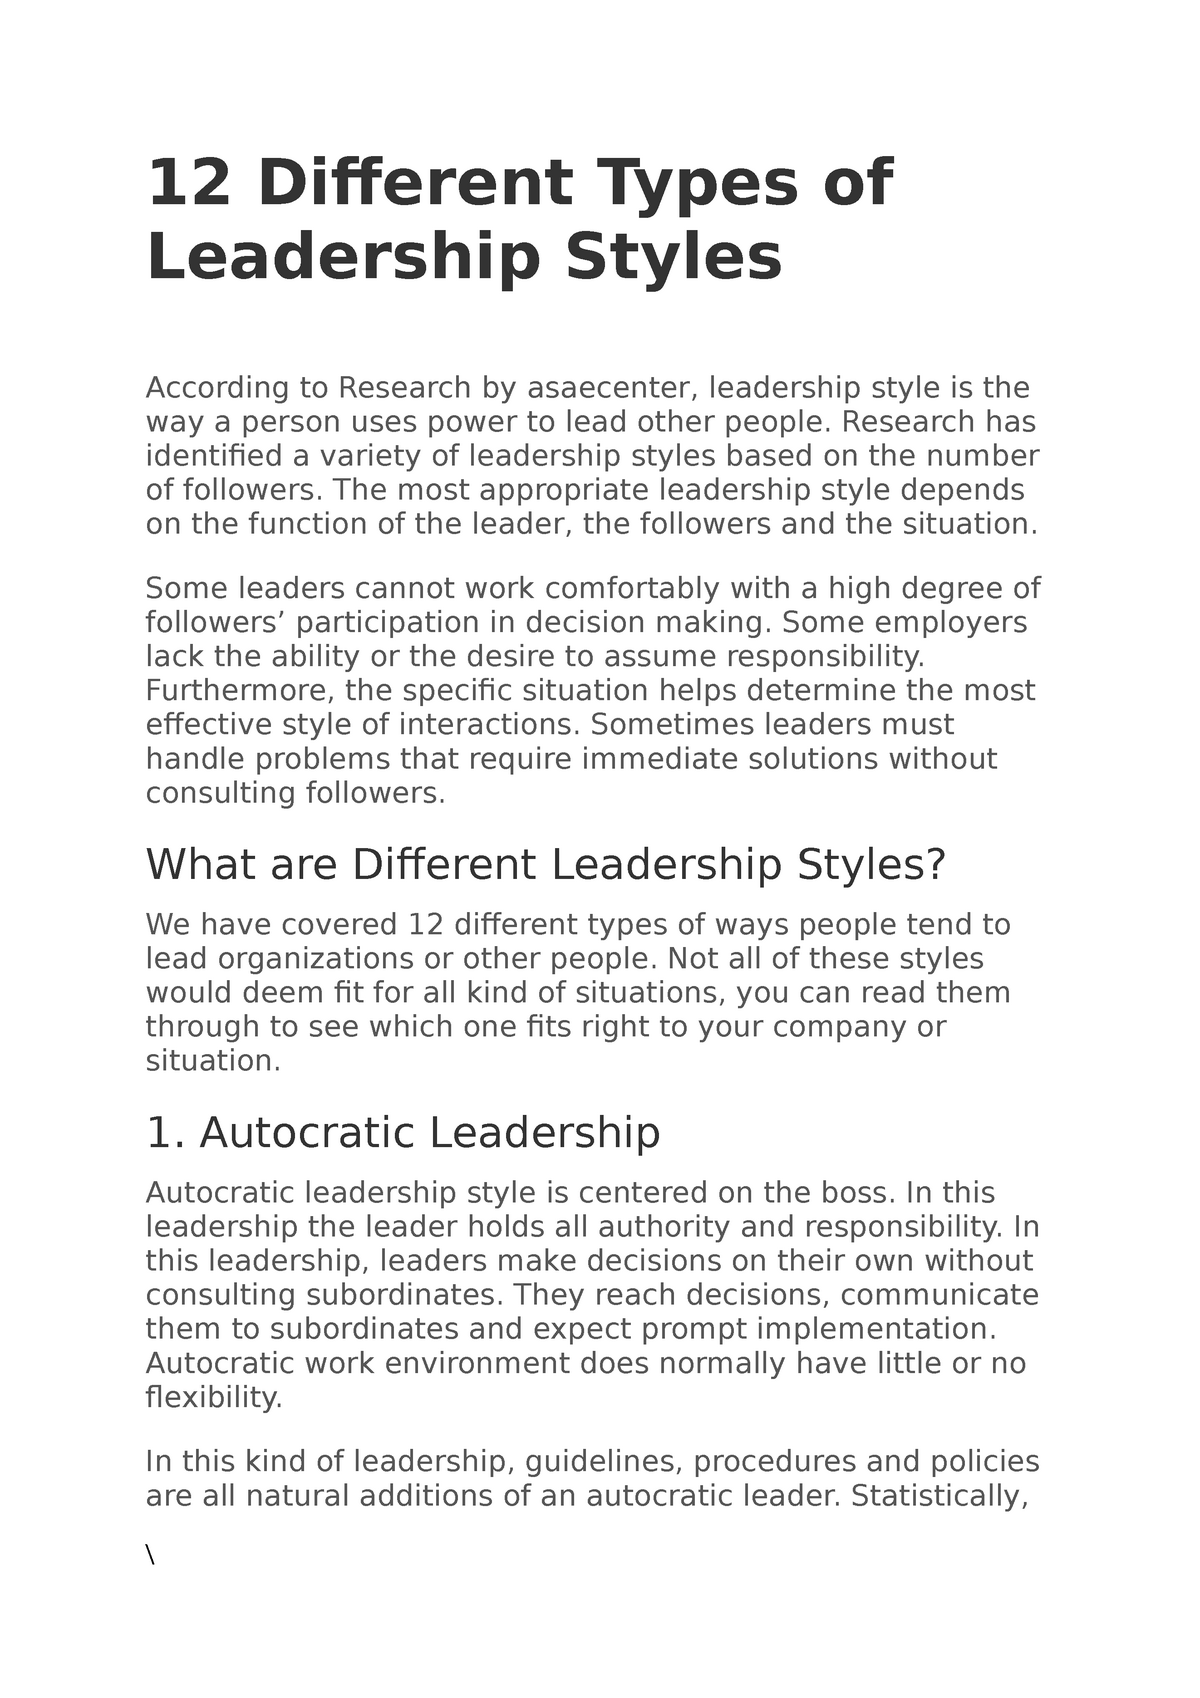 classification essay on leadership styles